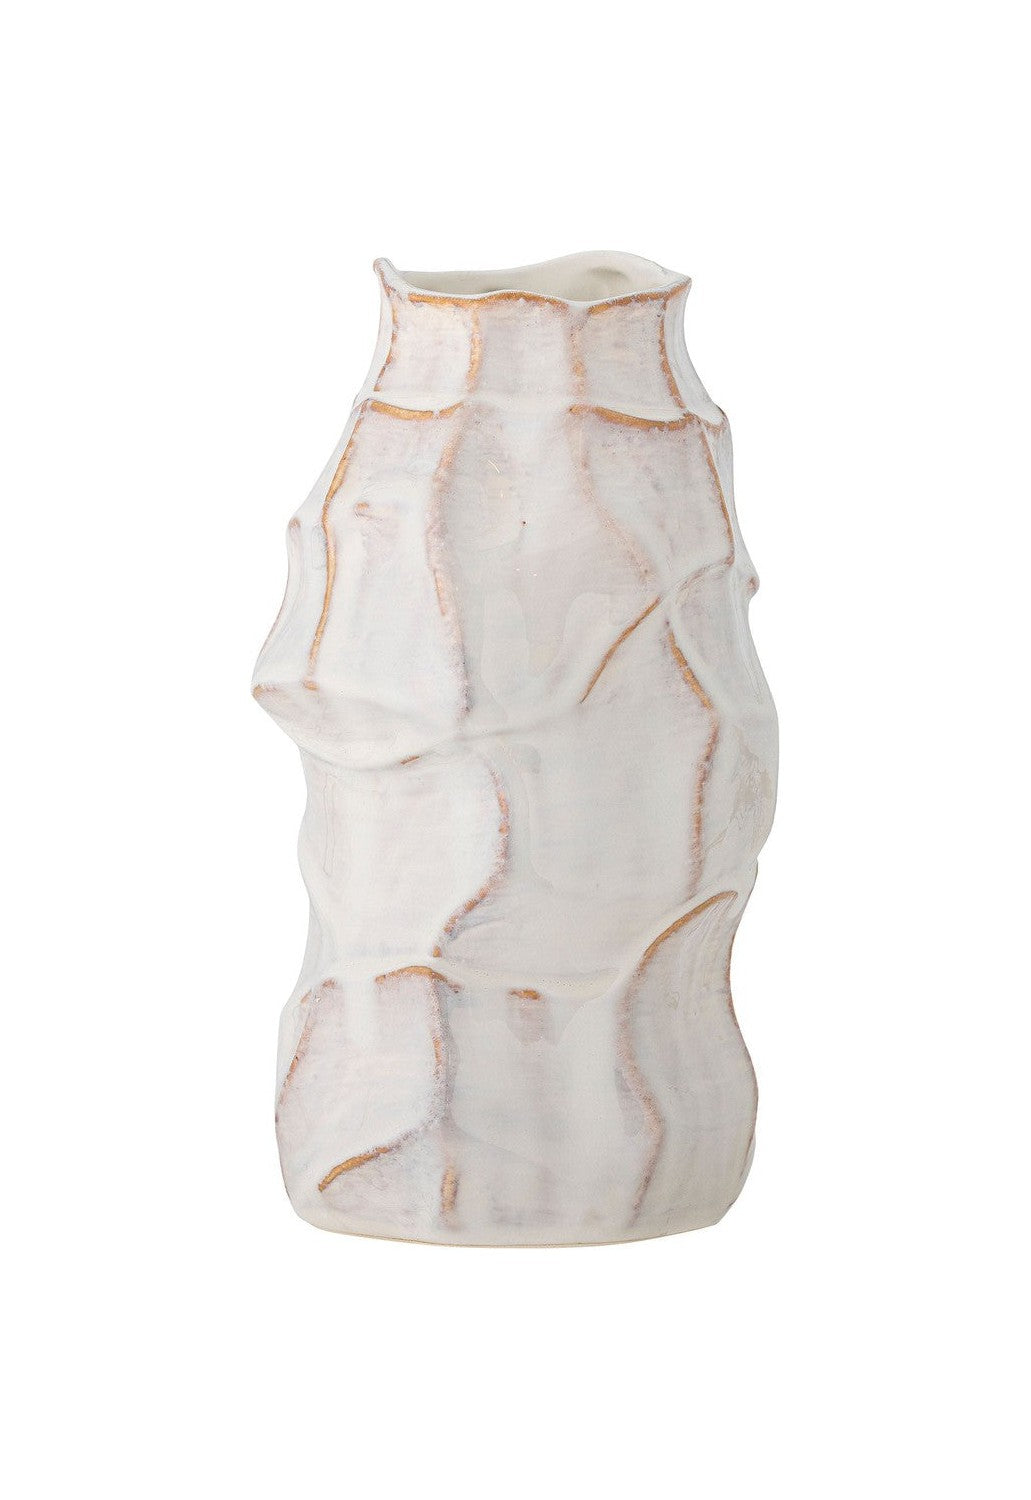 Bloomingville Dolores Vase, White, Stoneware